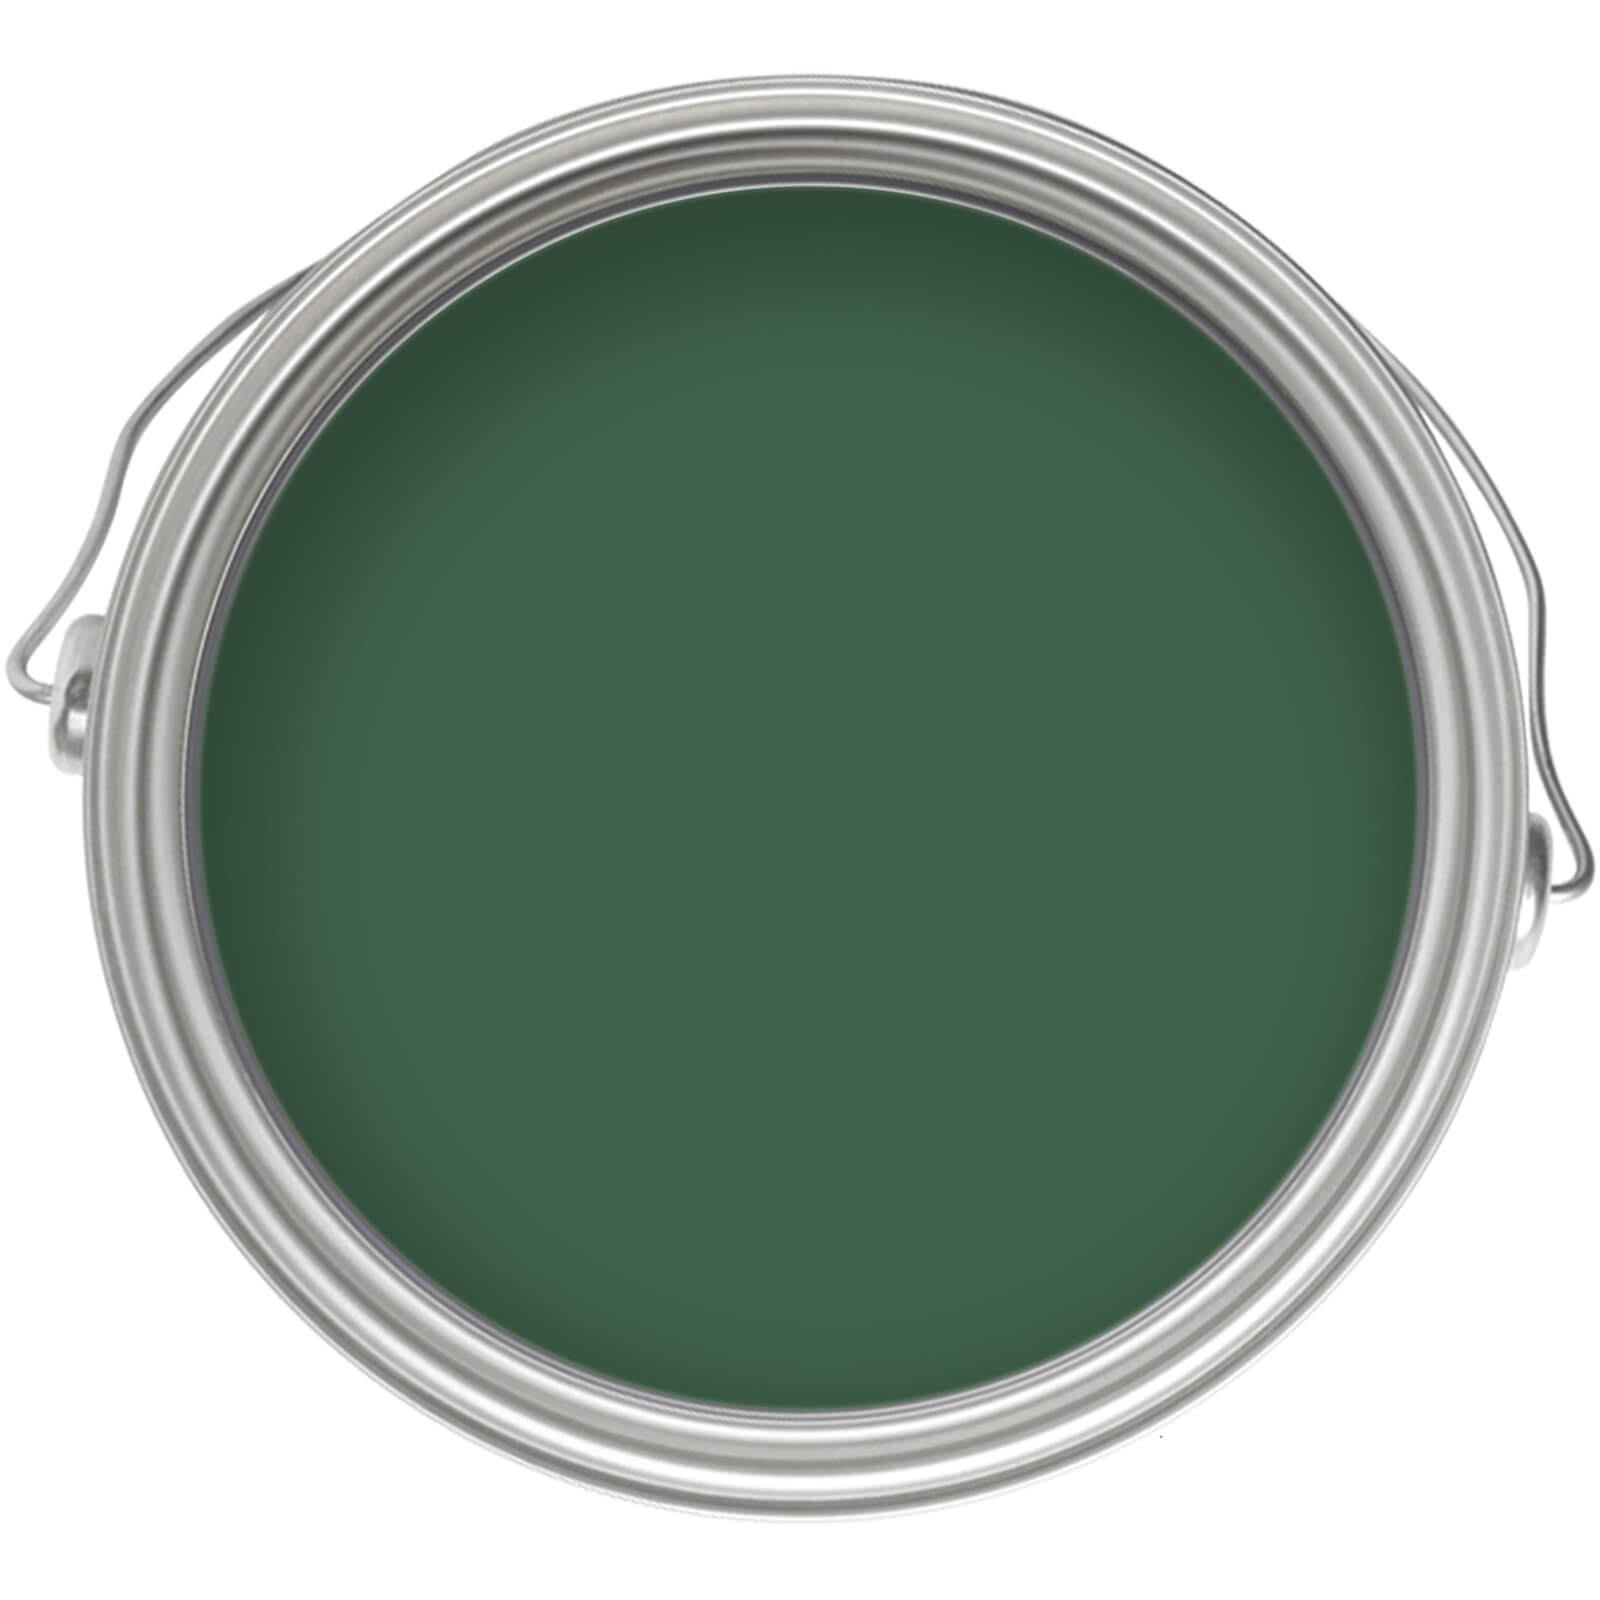 Homebase Exterior Gloss Paint - Empire Green 750ml